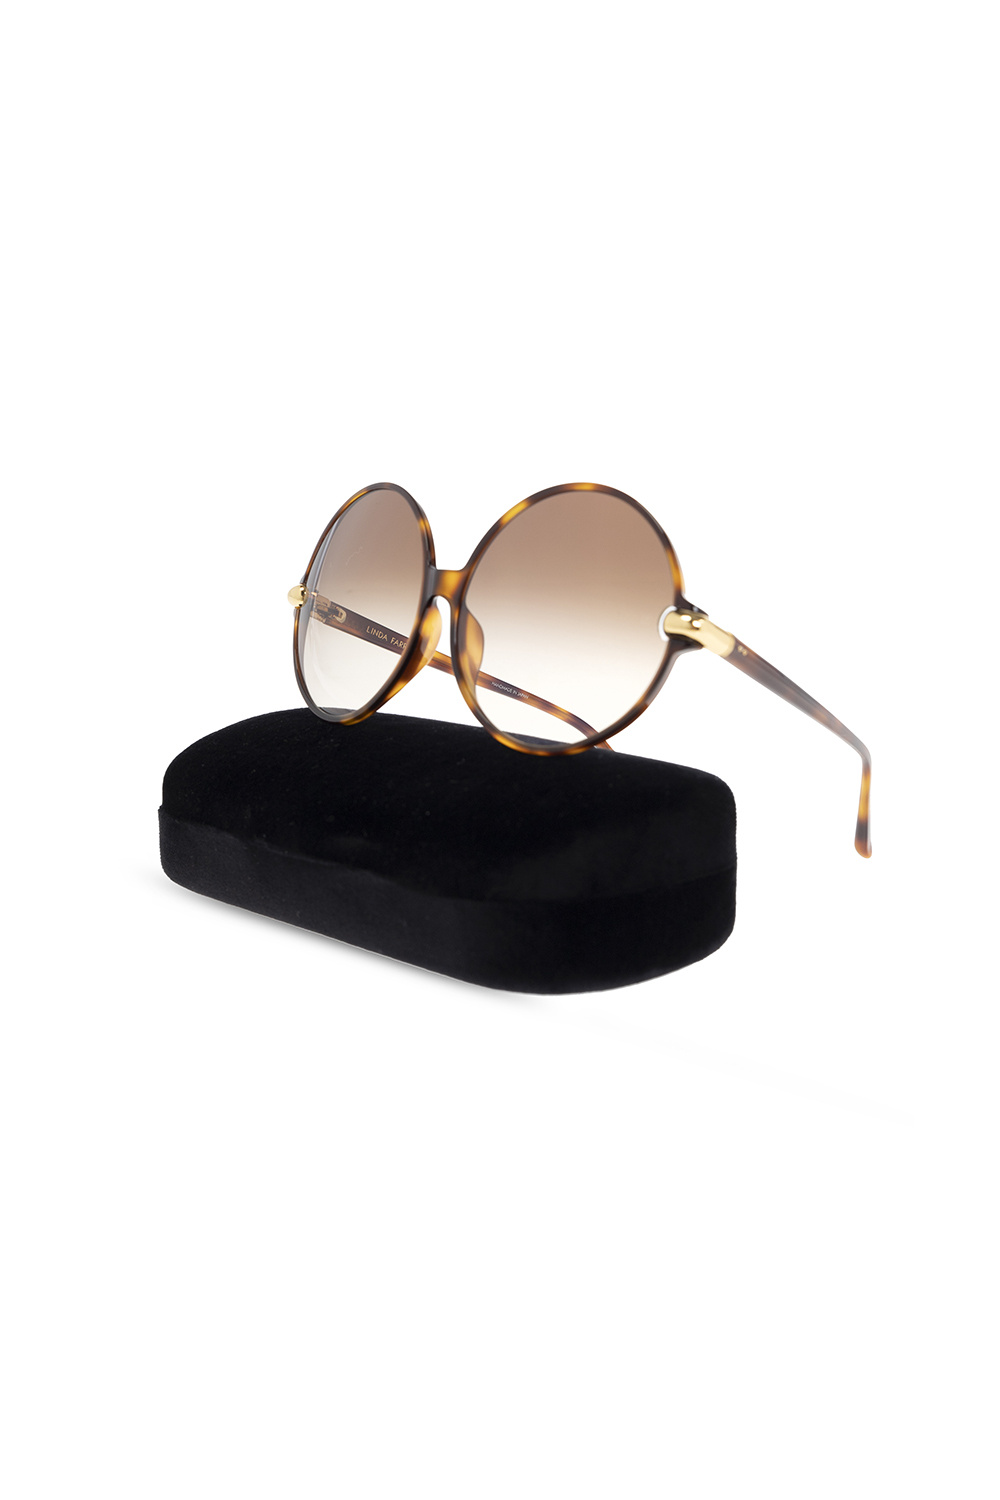 Linda Farrow ‘Victoria’ Hexagon sunglasses